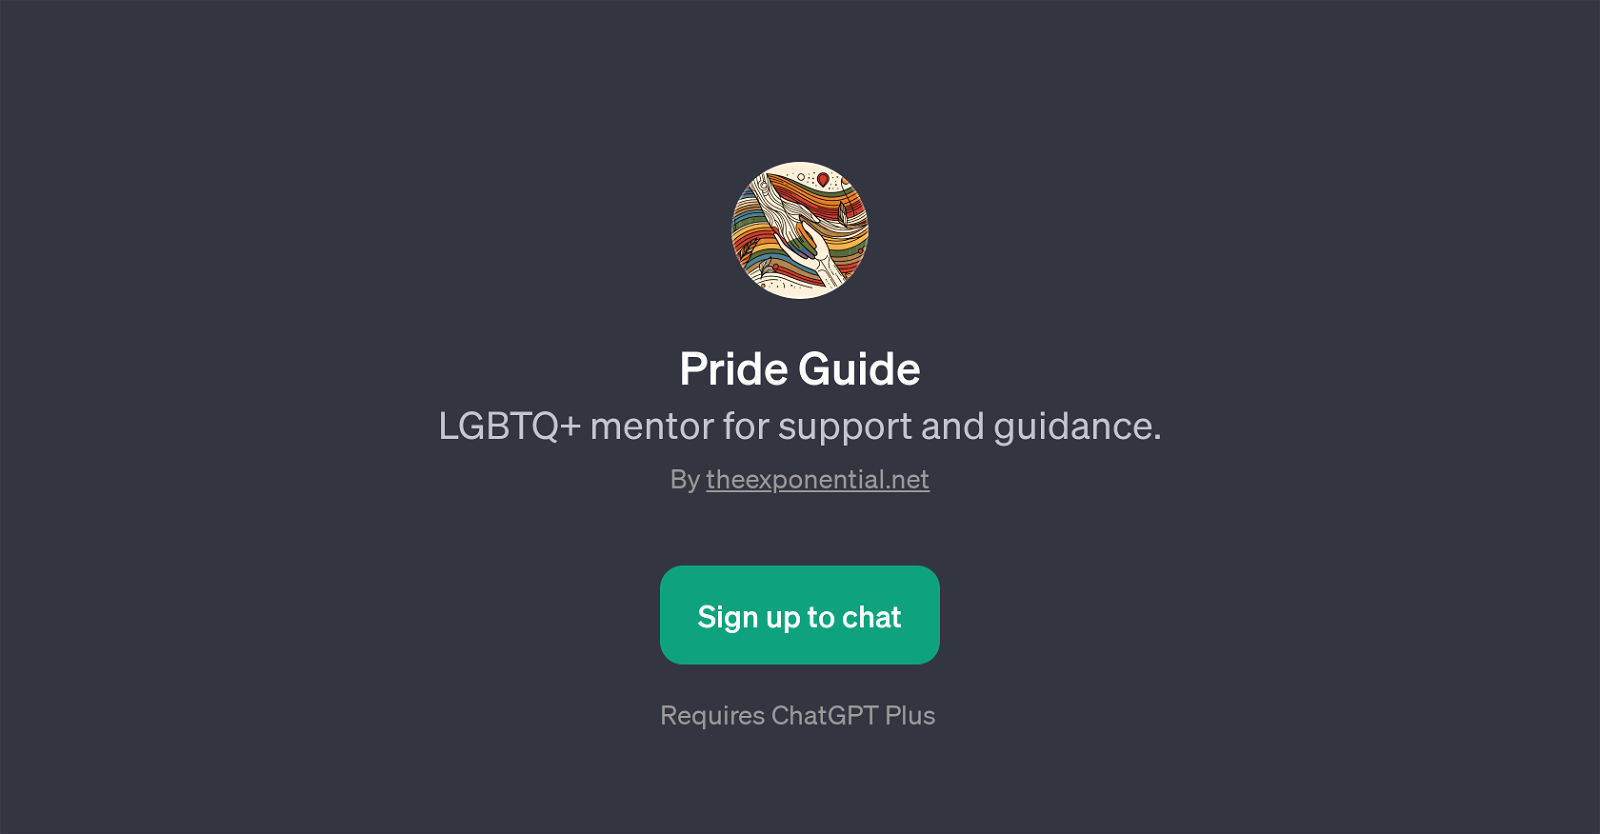 Pride Guide website